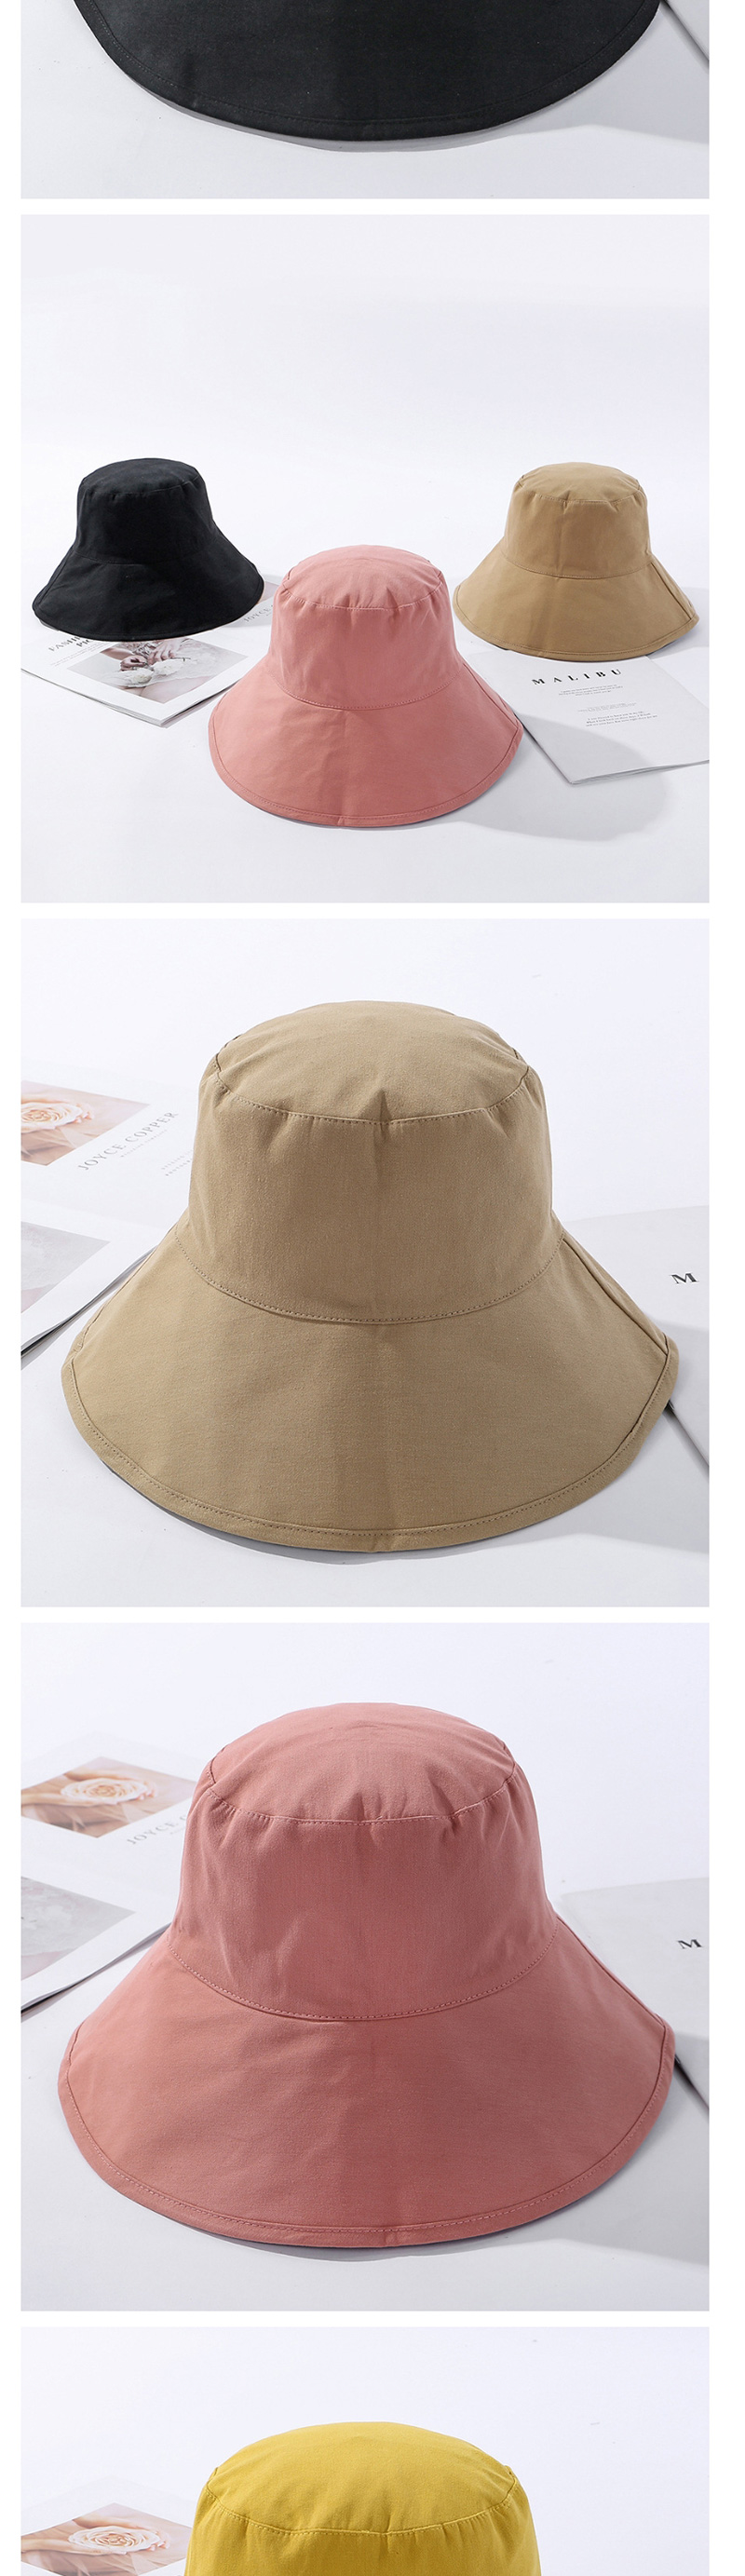 Fashion Aqua Green Cotton Double-sided Wear Large Brimmed Hat,Sun Hats